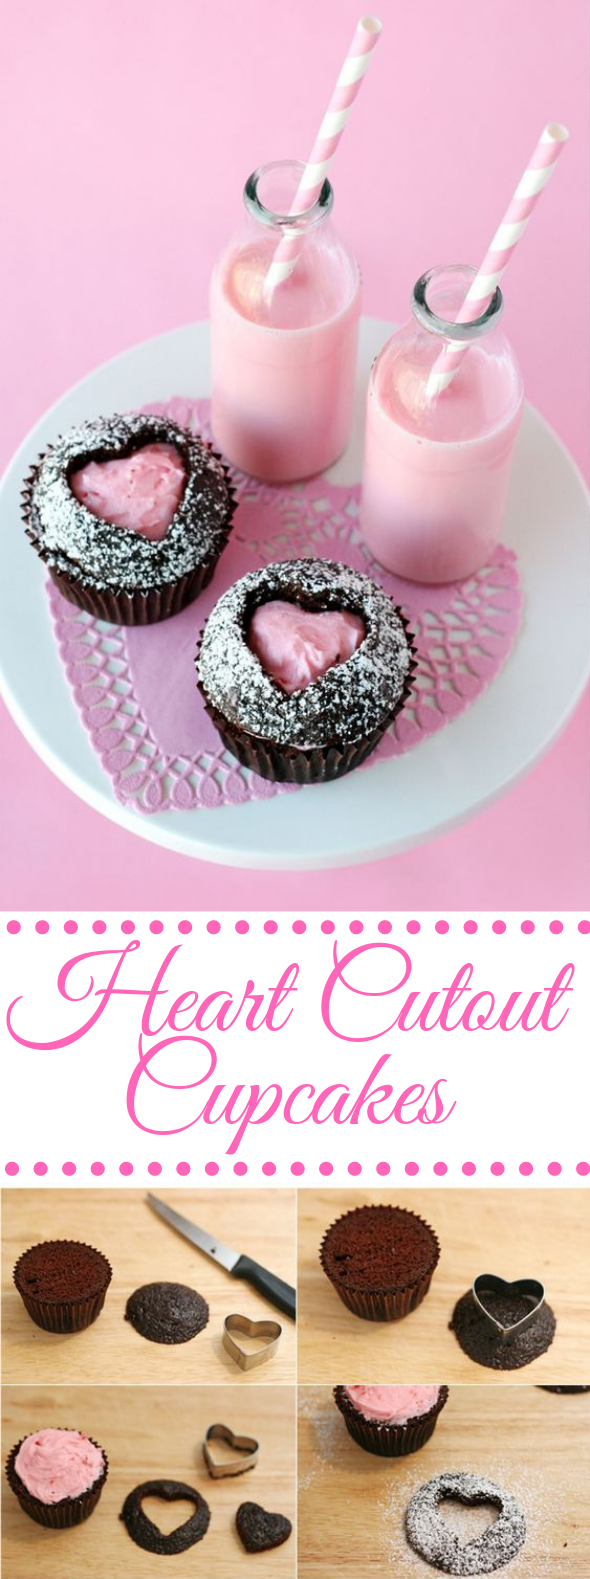 Sweet Heart Cupcakes #dessert #cakes